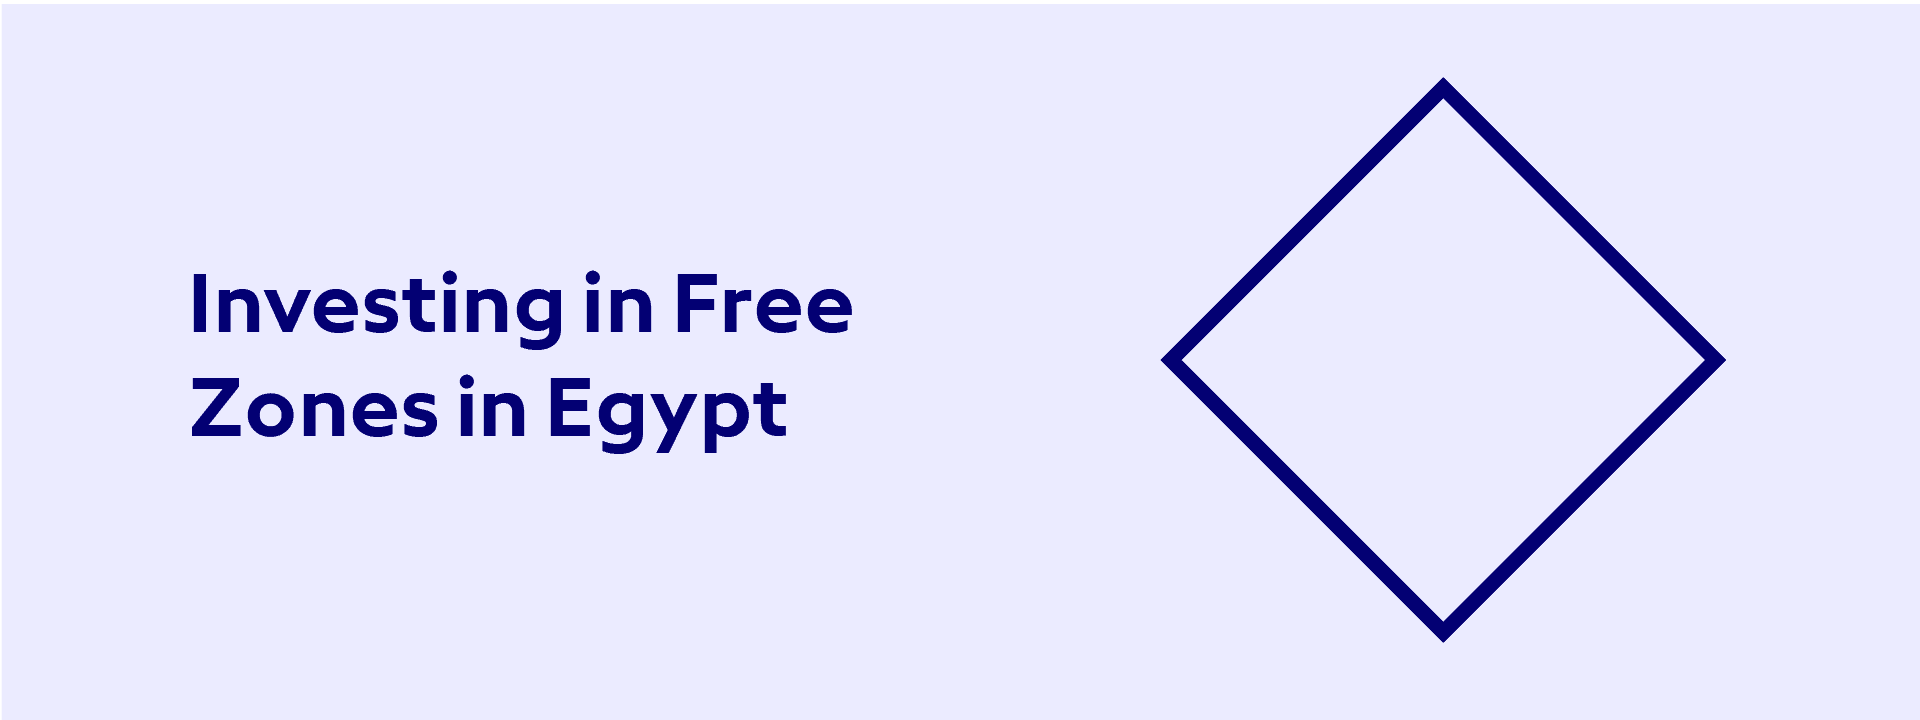 Investing in Free Zones in Egypt